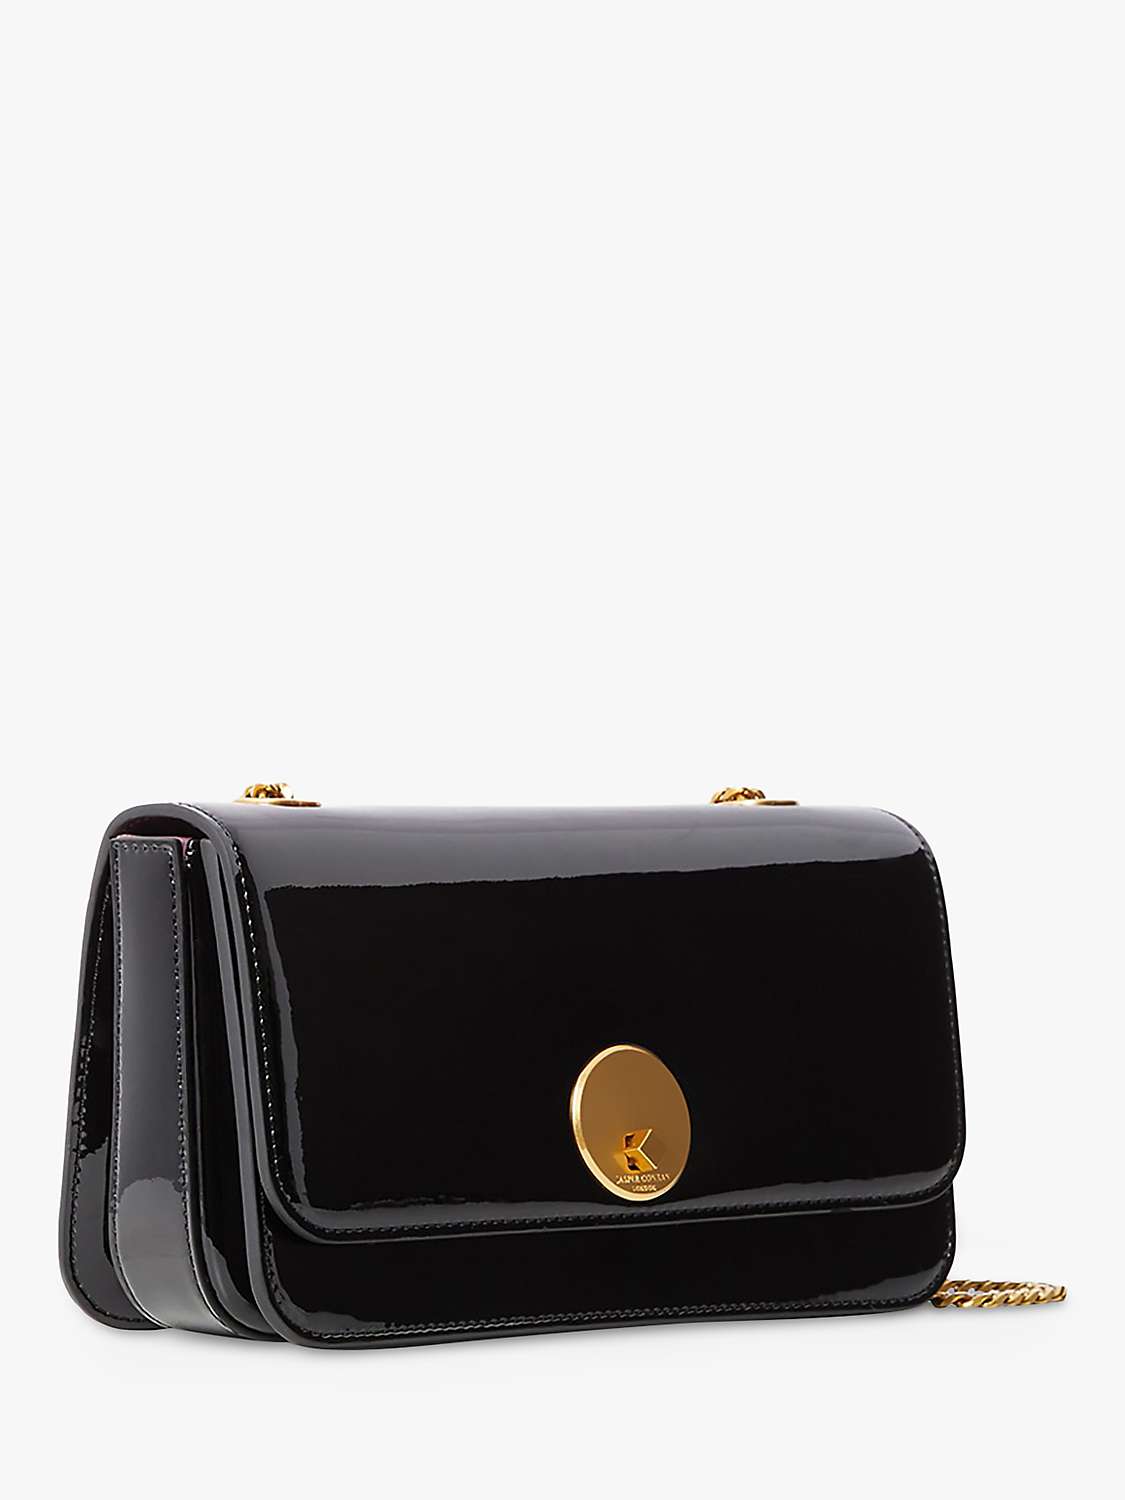 Buy Jasper Conran Celia Chain Strap Evening Handbag Online at johnlewis.com